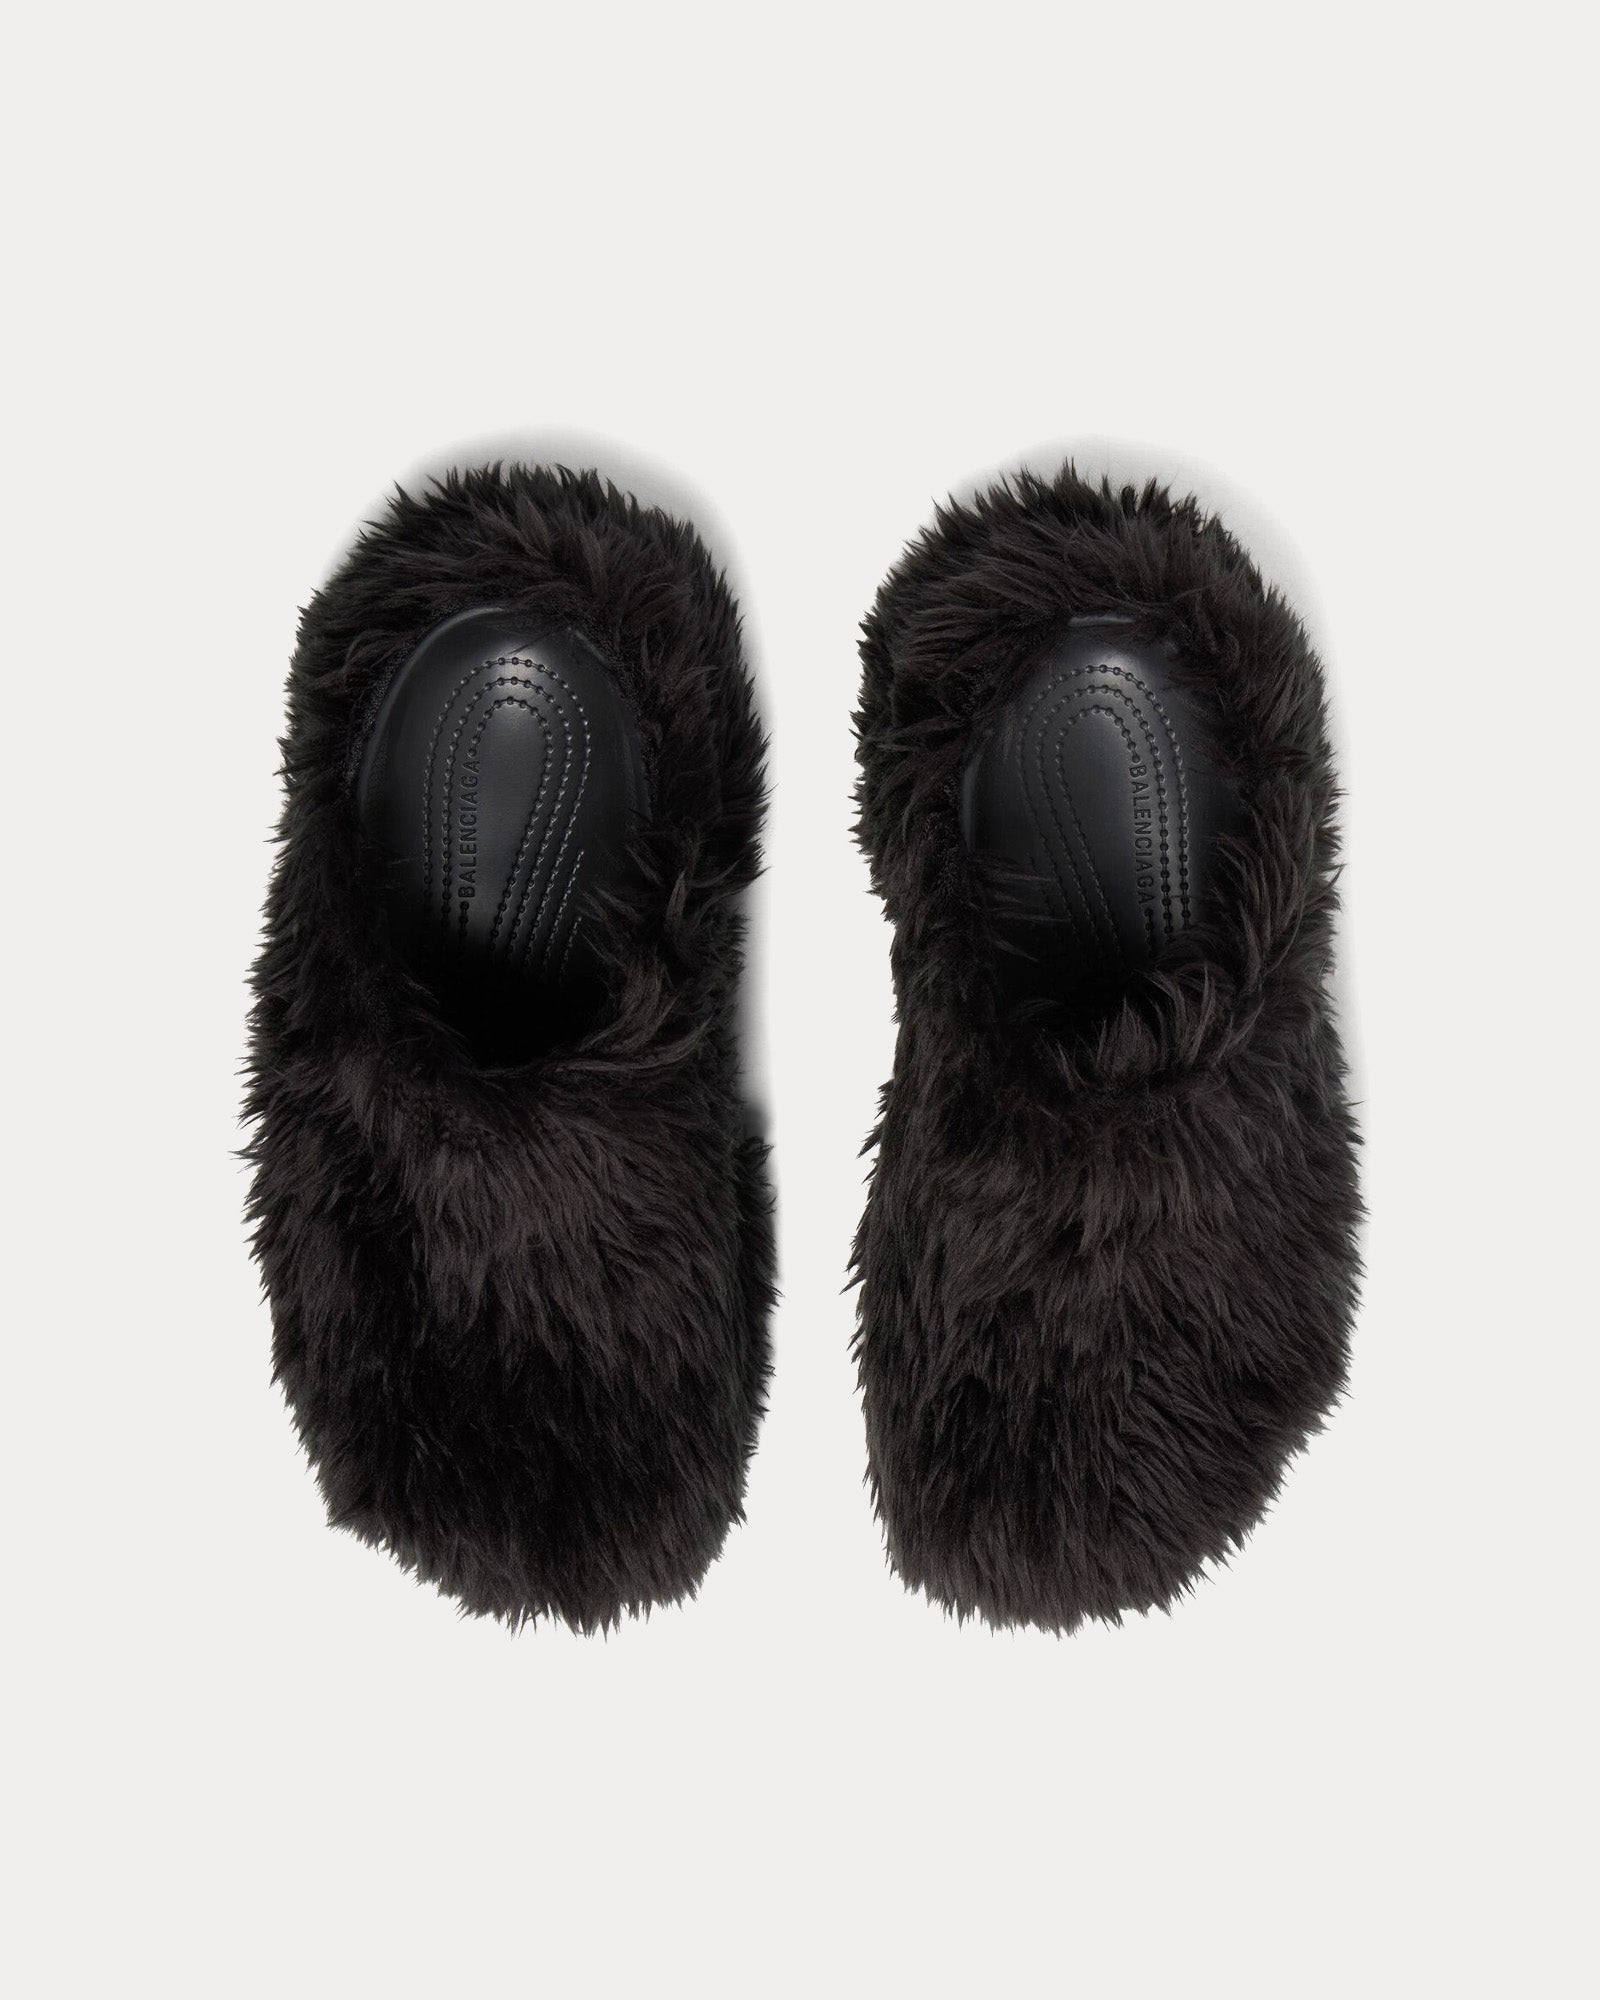 Balenciaga x Crocs - Fake Fur Black Mules